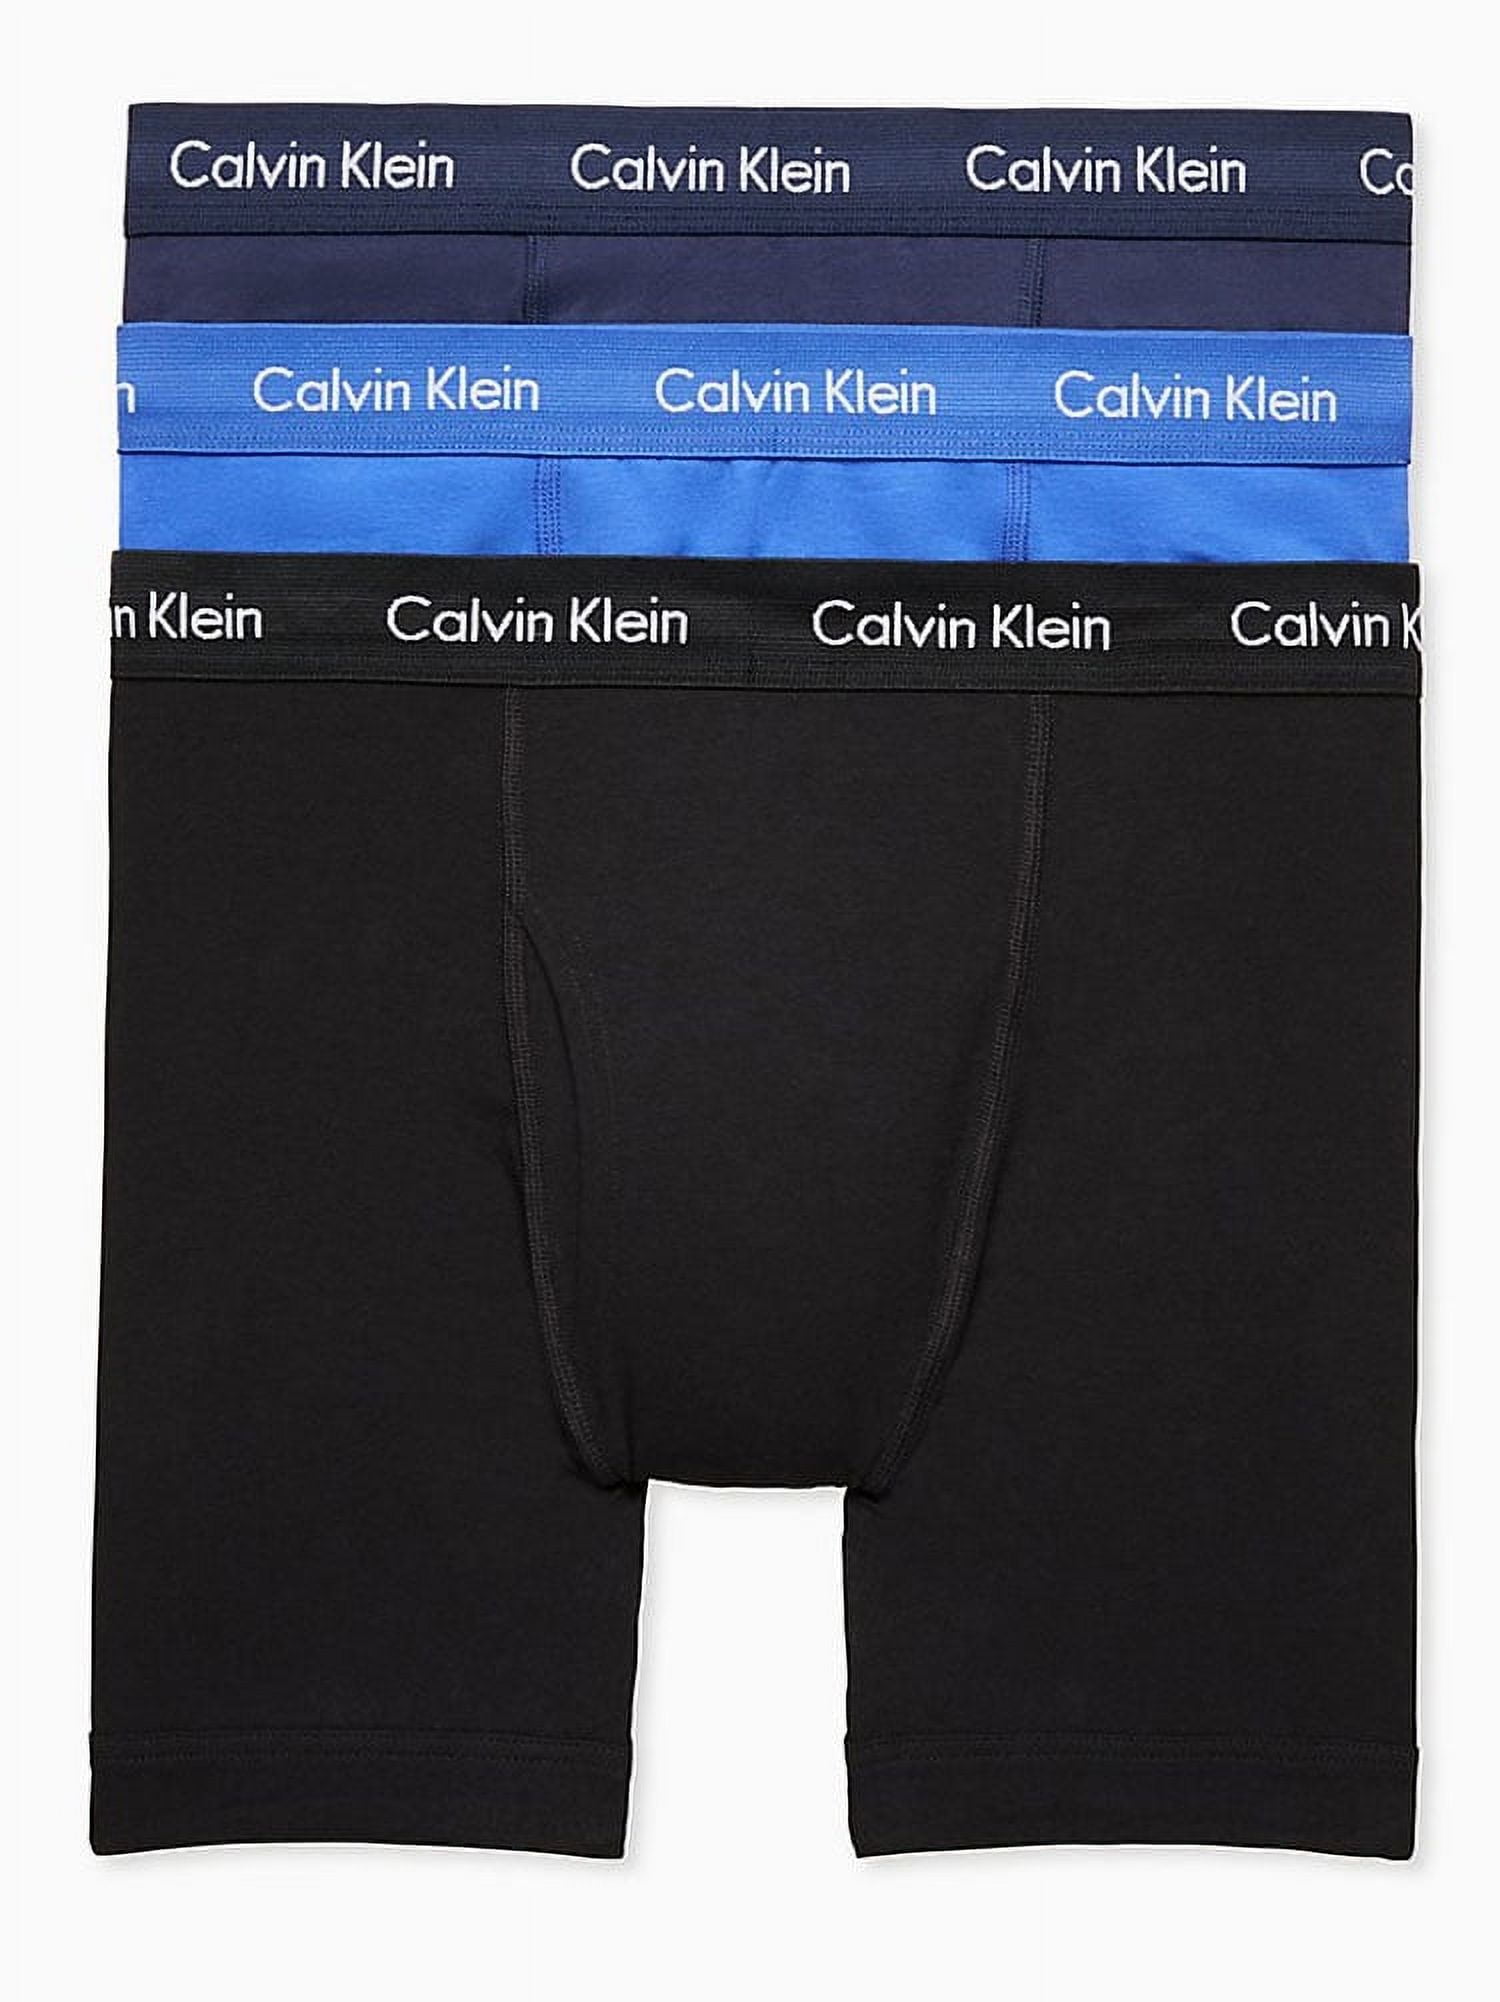 Calvin Klein 3 Pack Cotton Stretch Boxer Short